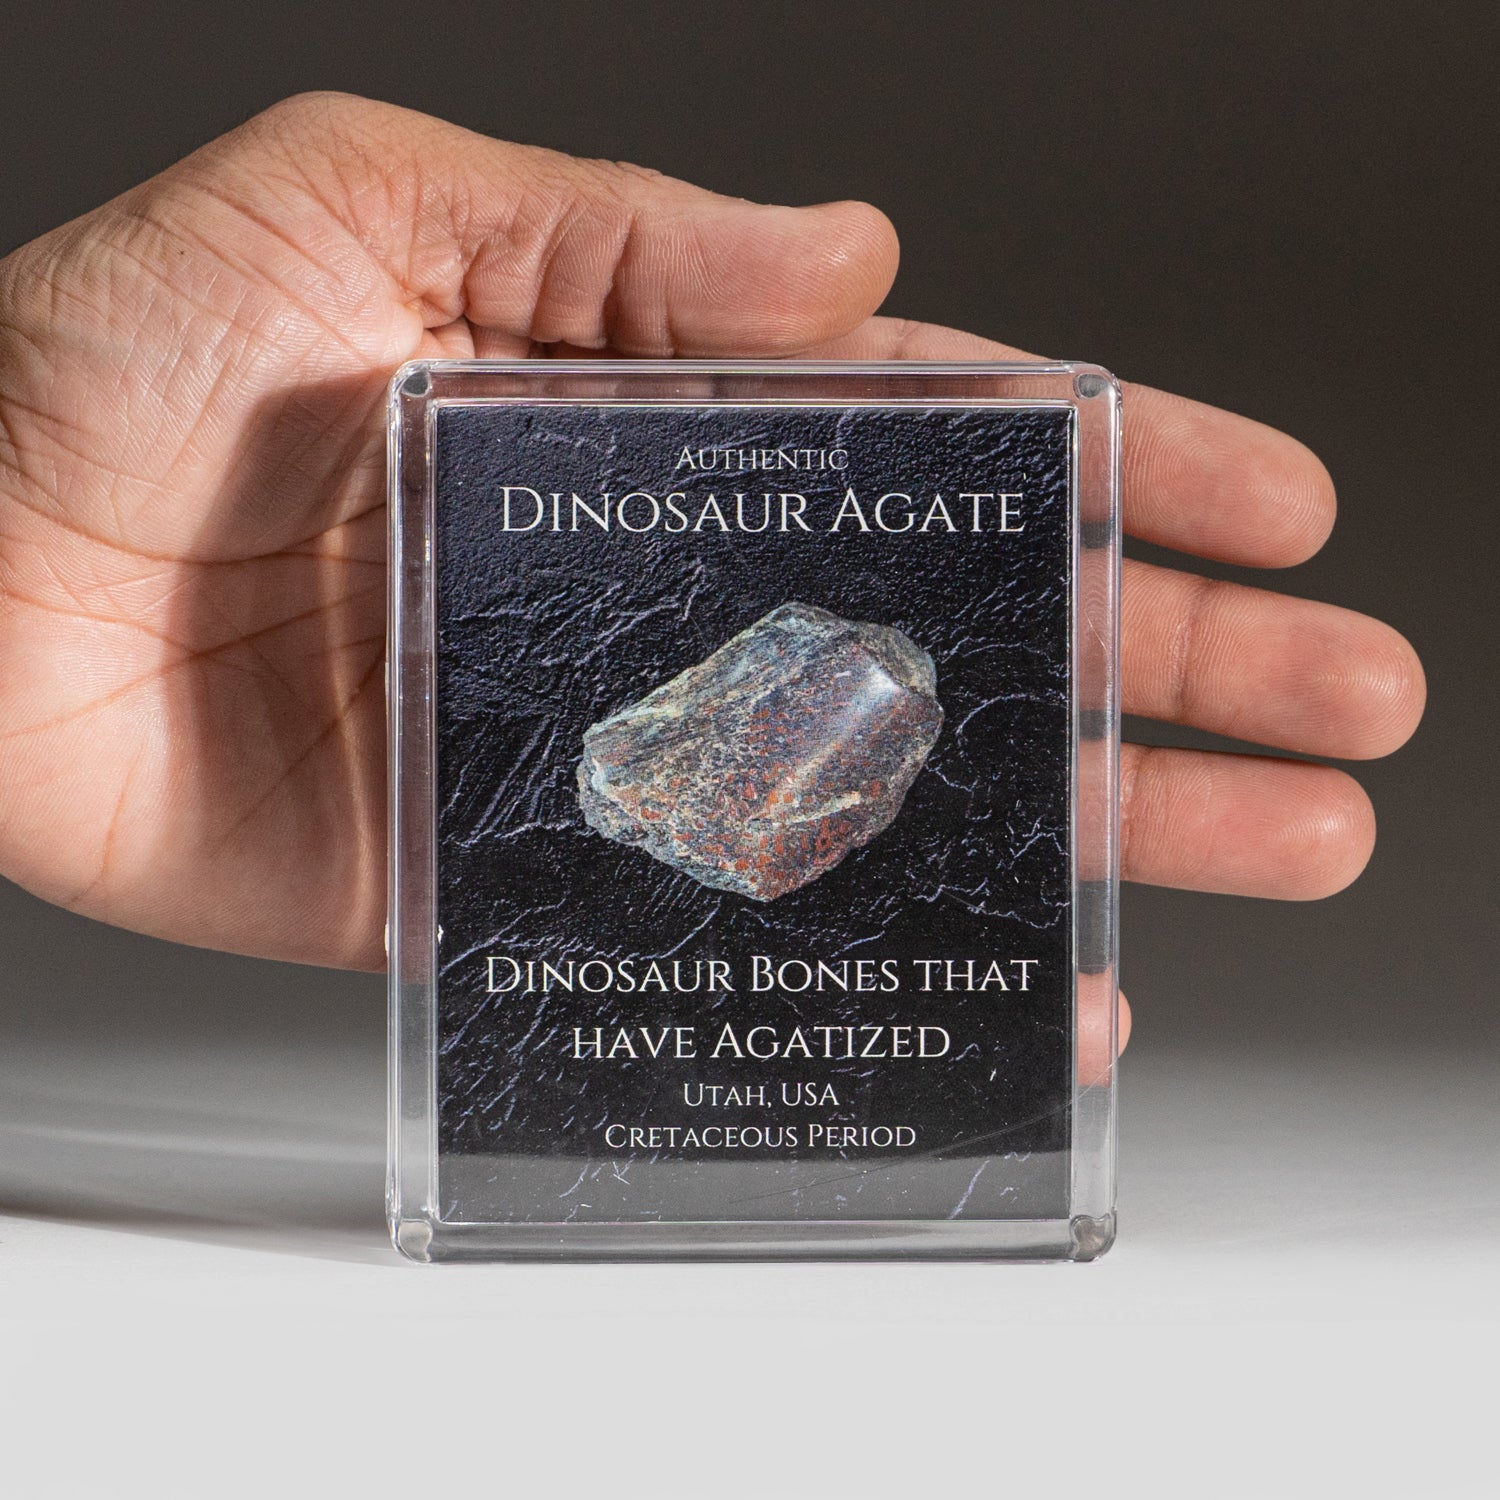 Genuine Dinosaur Agate Specimen in Acrylic Display Box